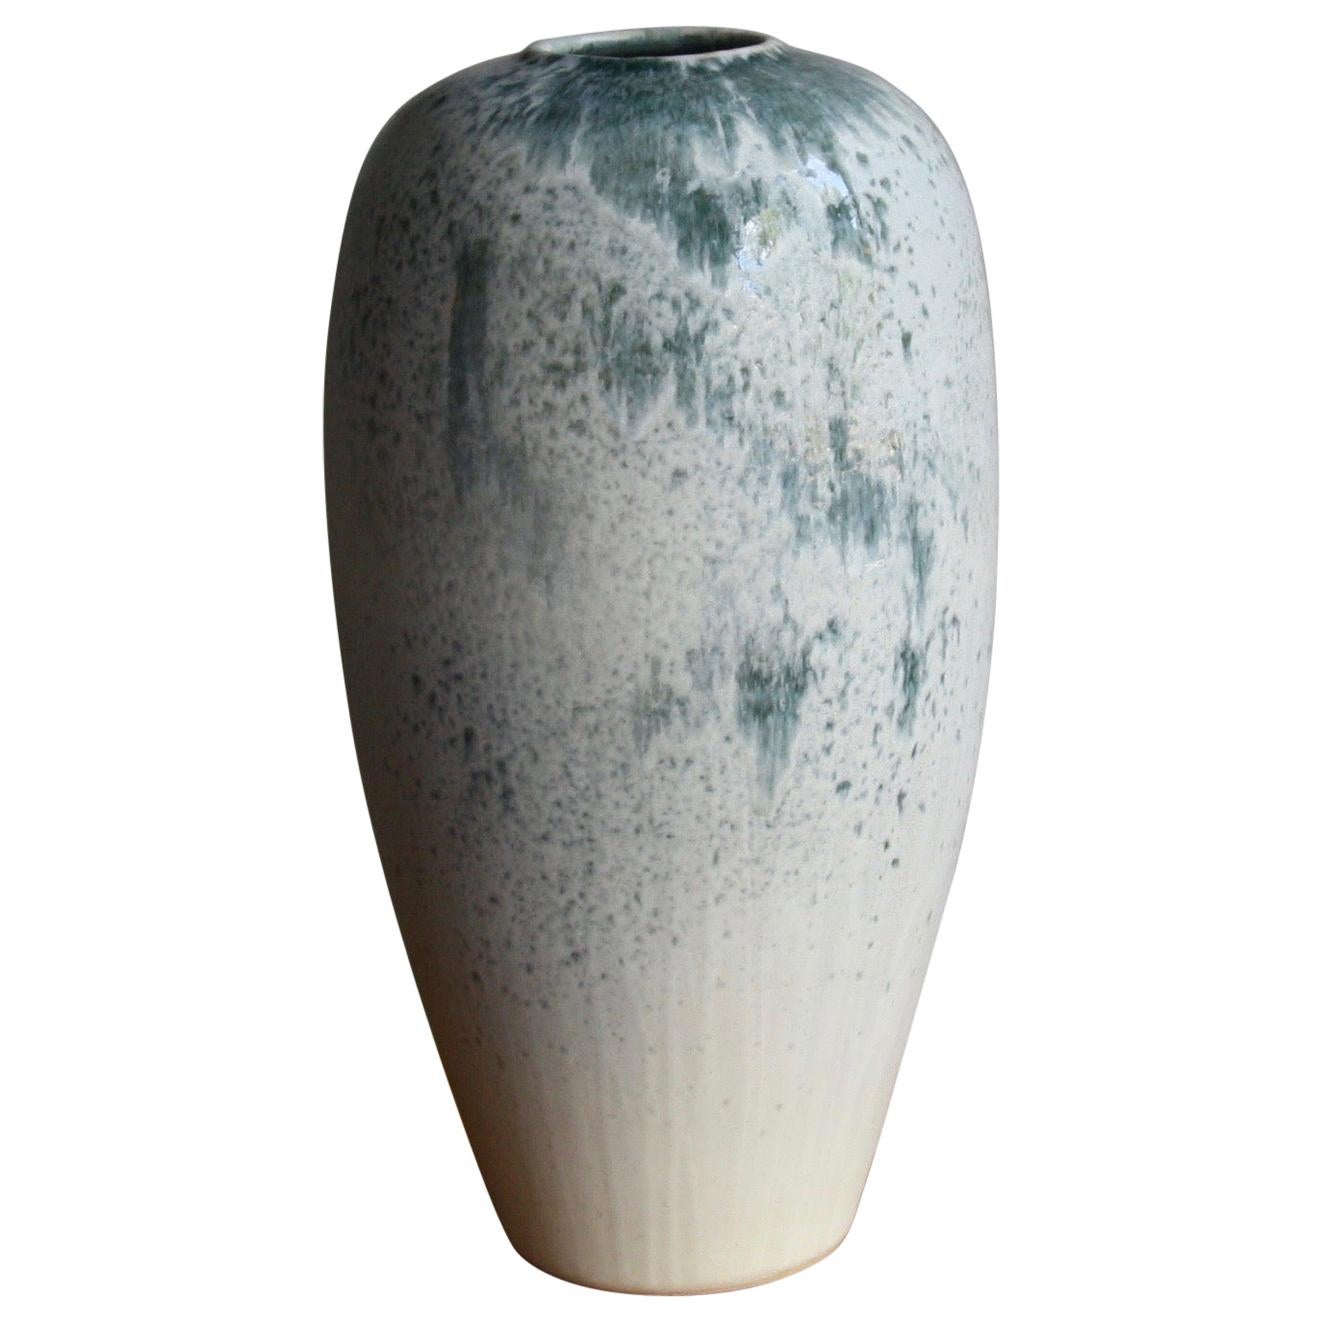 Kasper Würtz One Off Stoneware 'Rising Balloon' Vase #1 Blue and White Glaze